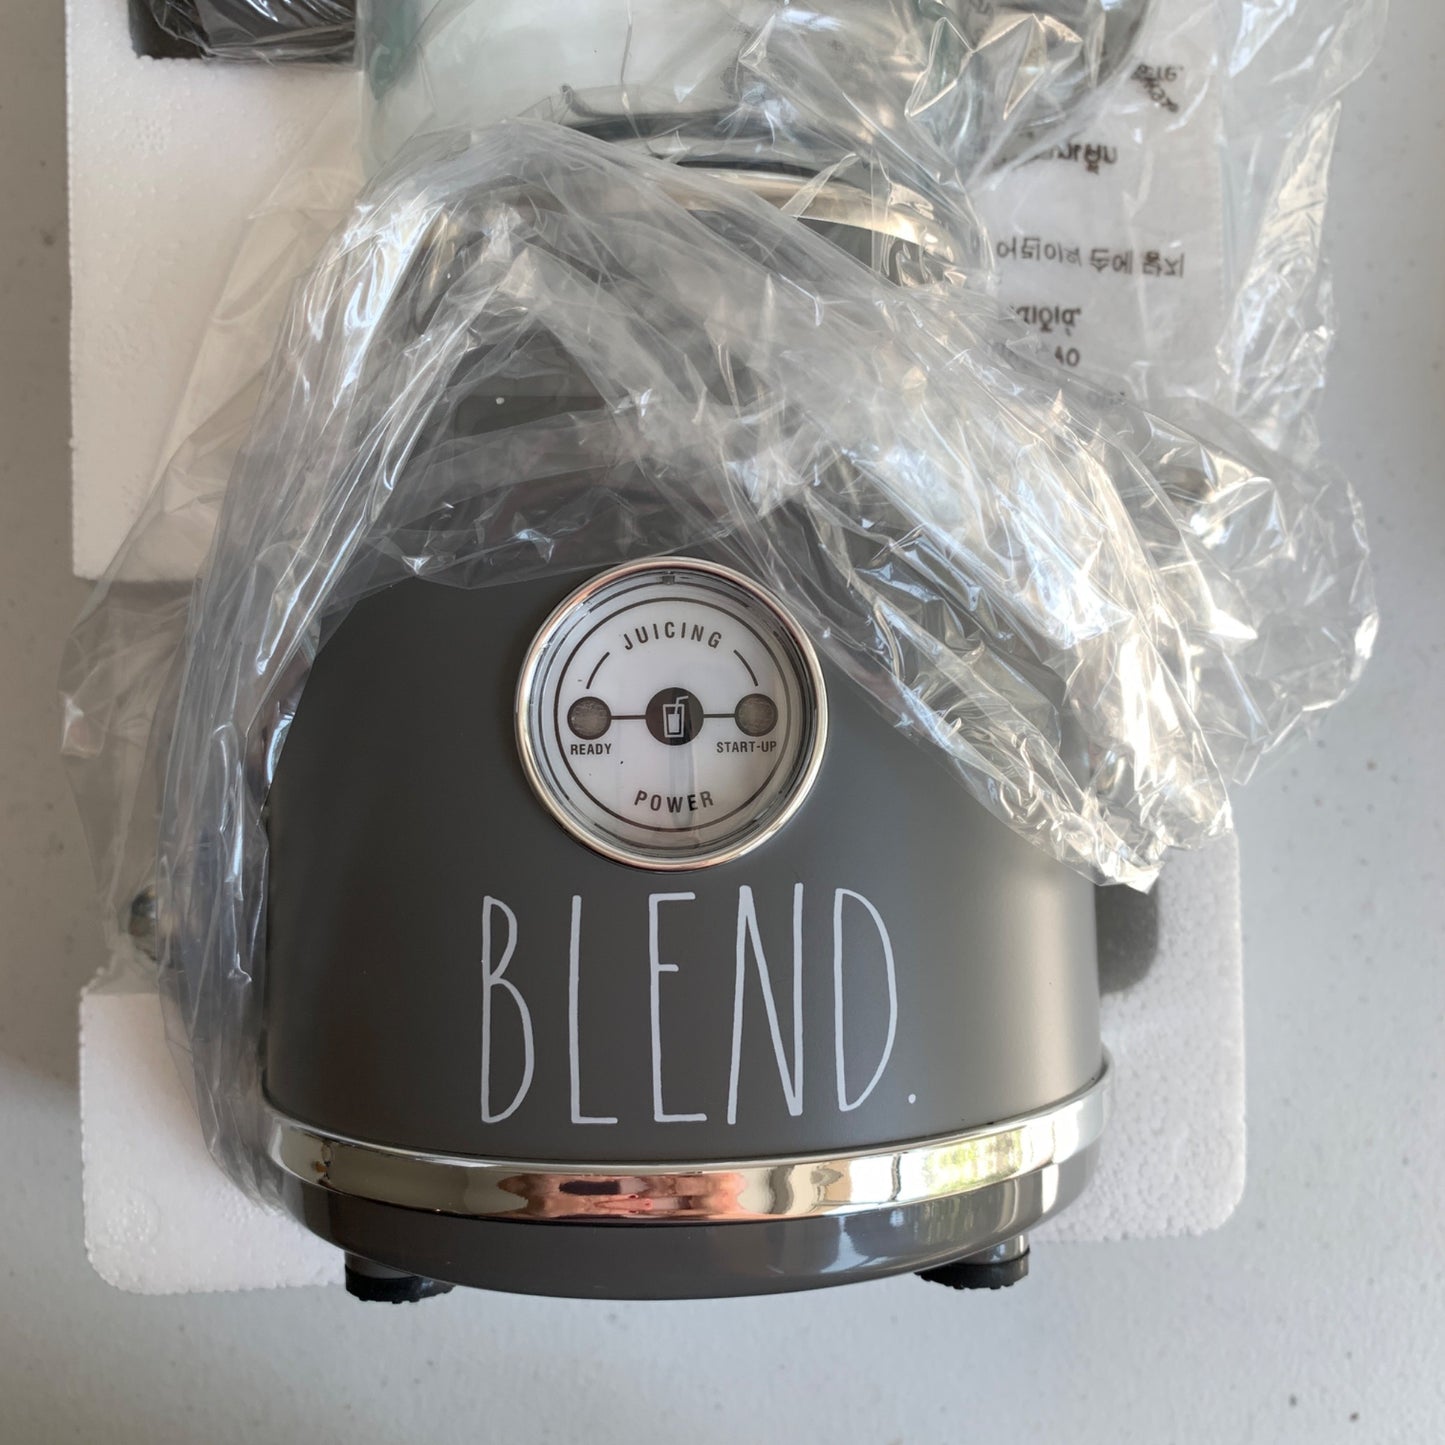 Rae Dunn Personal Blender Gray RDBL01 New